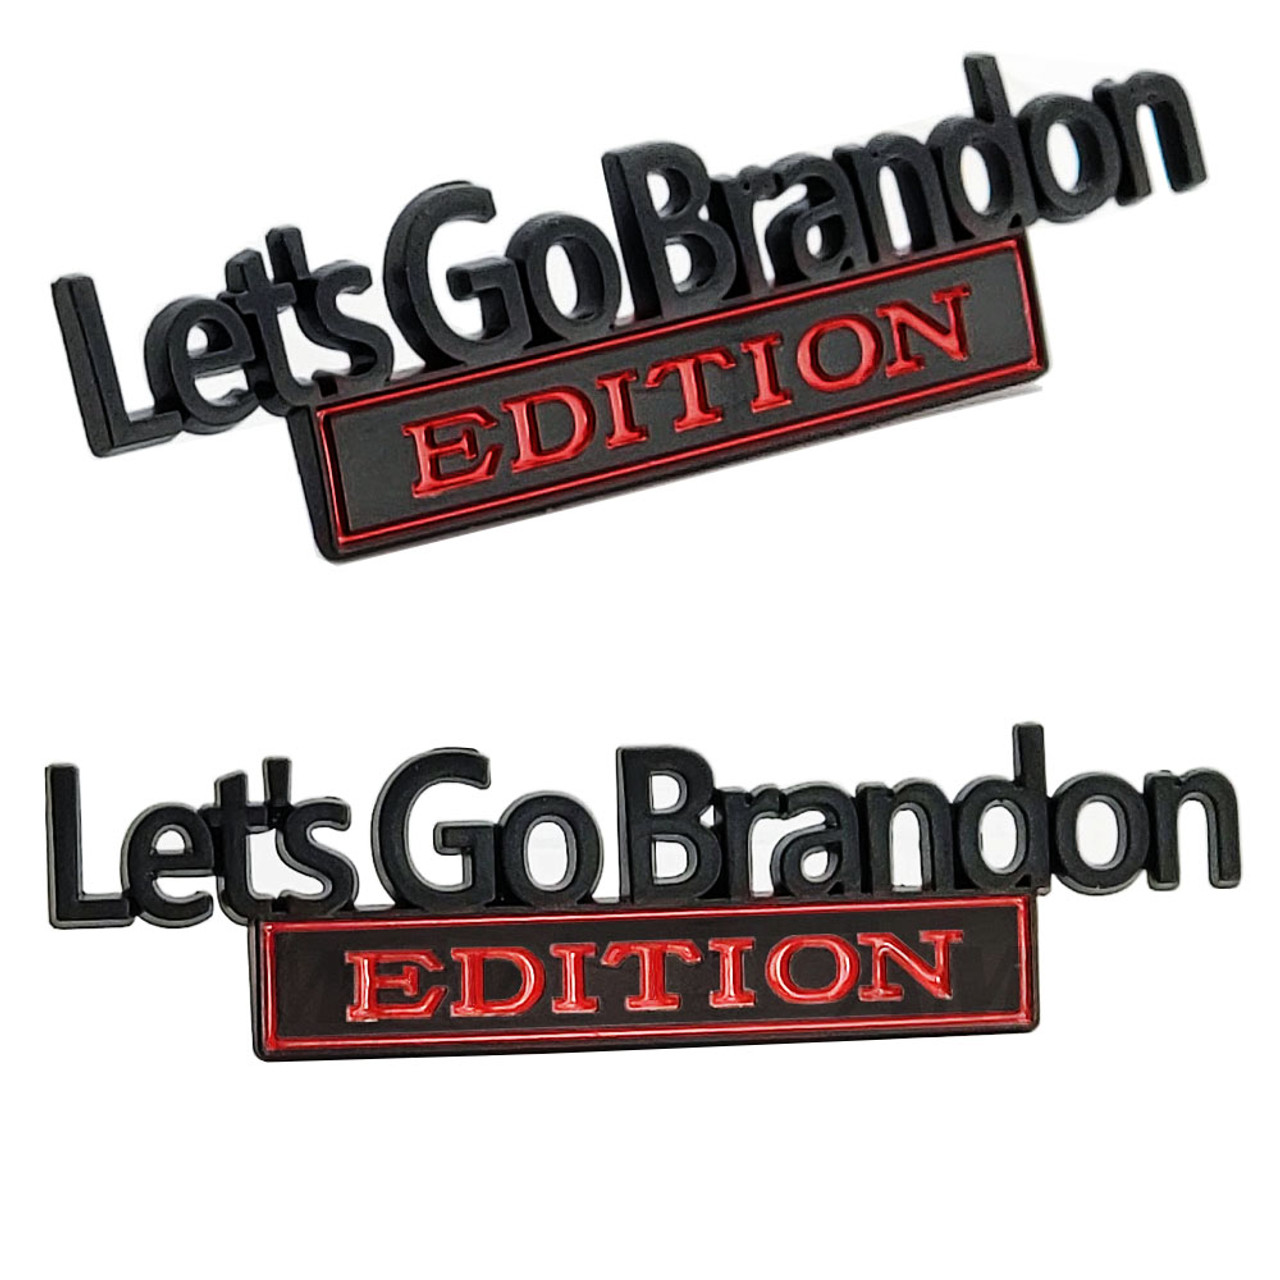 Let's Go Brandon Edition Emblem